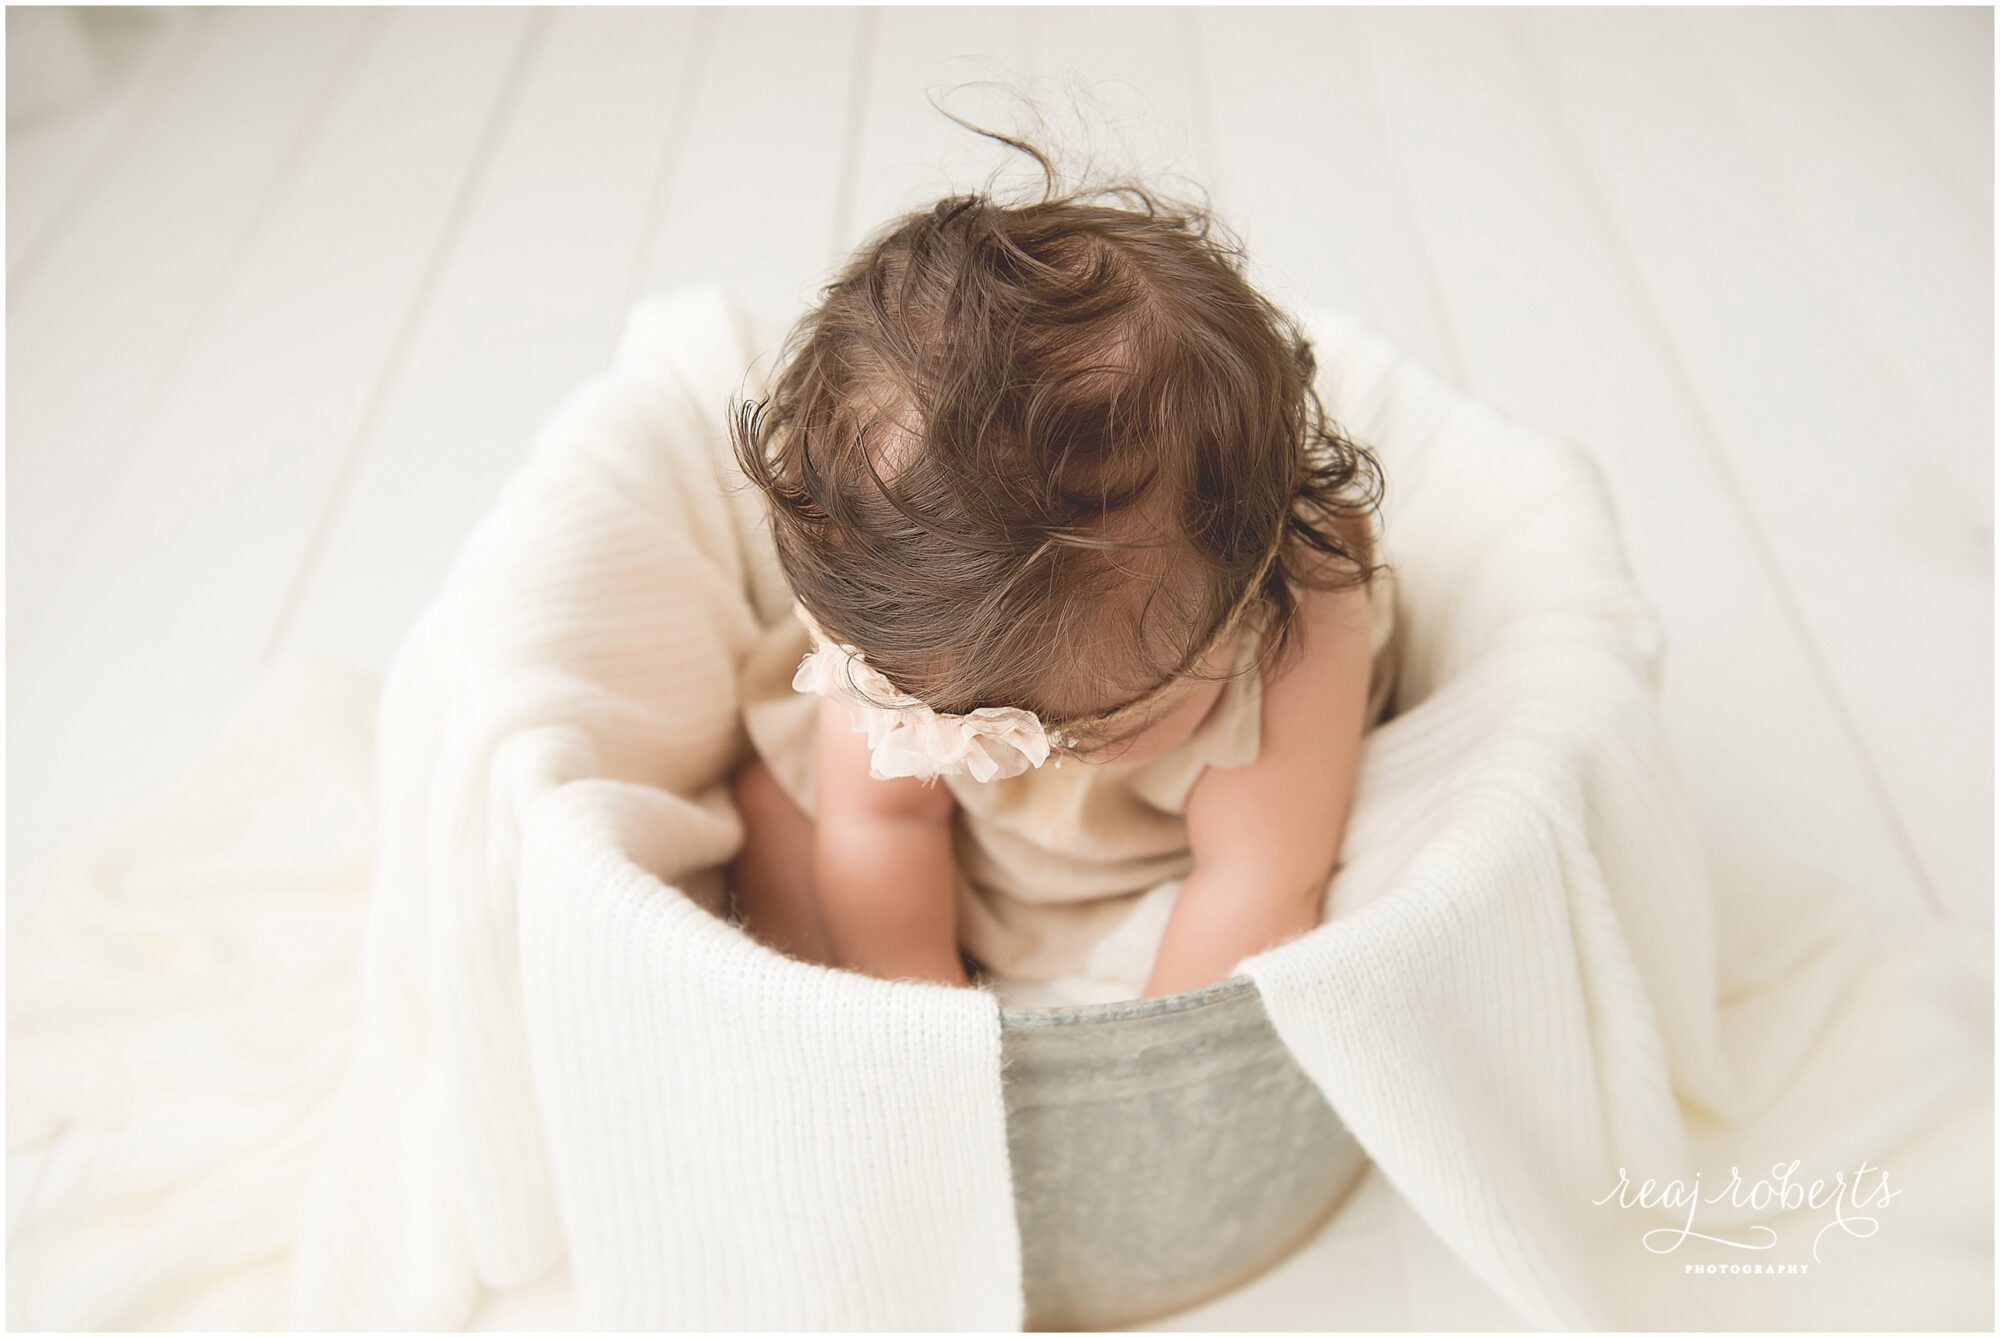 Curly baby hair | Chandler baby photographer | Reaj Roberts Photographer